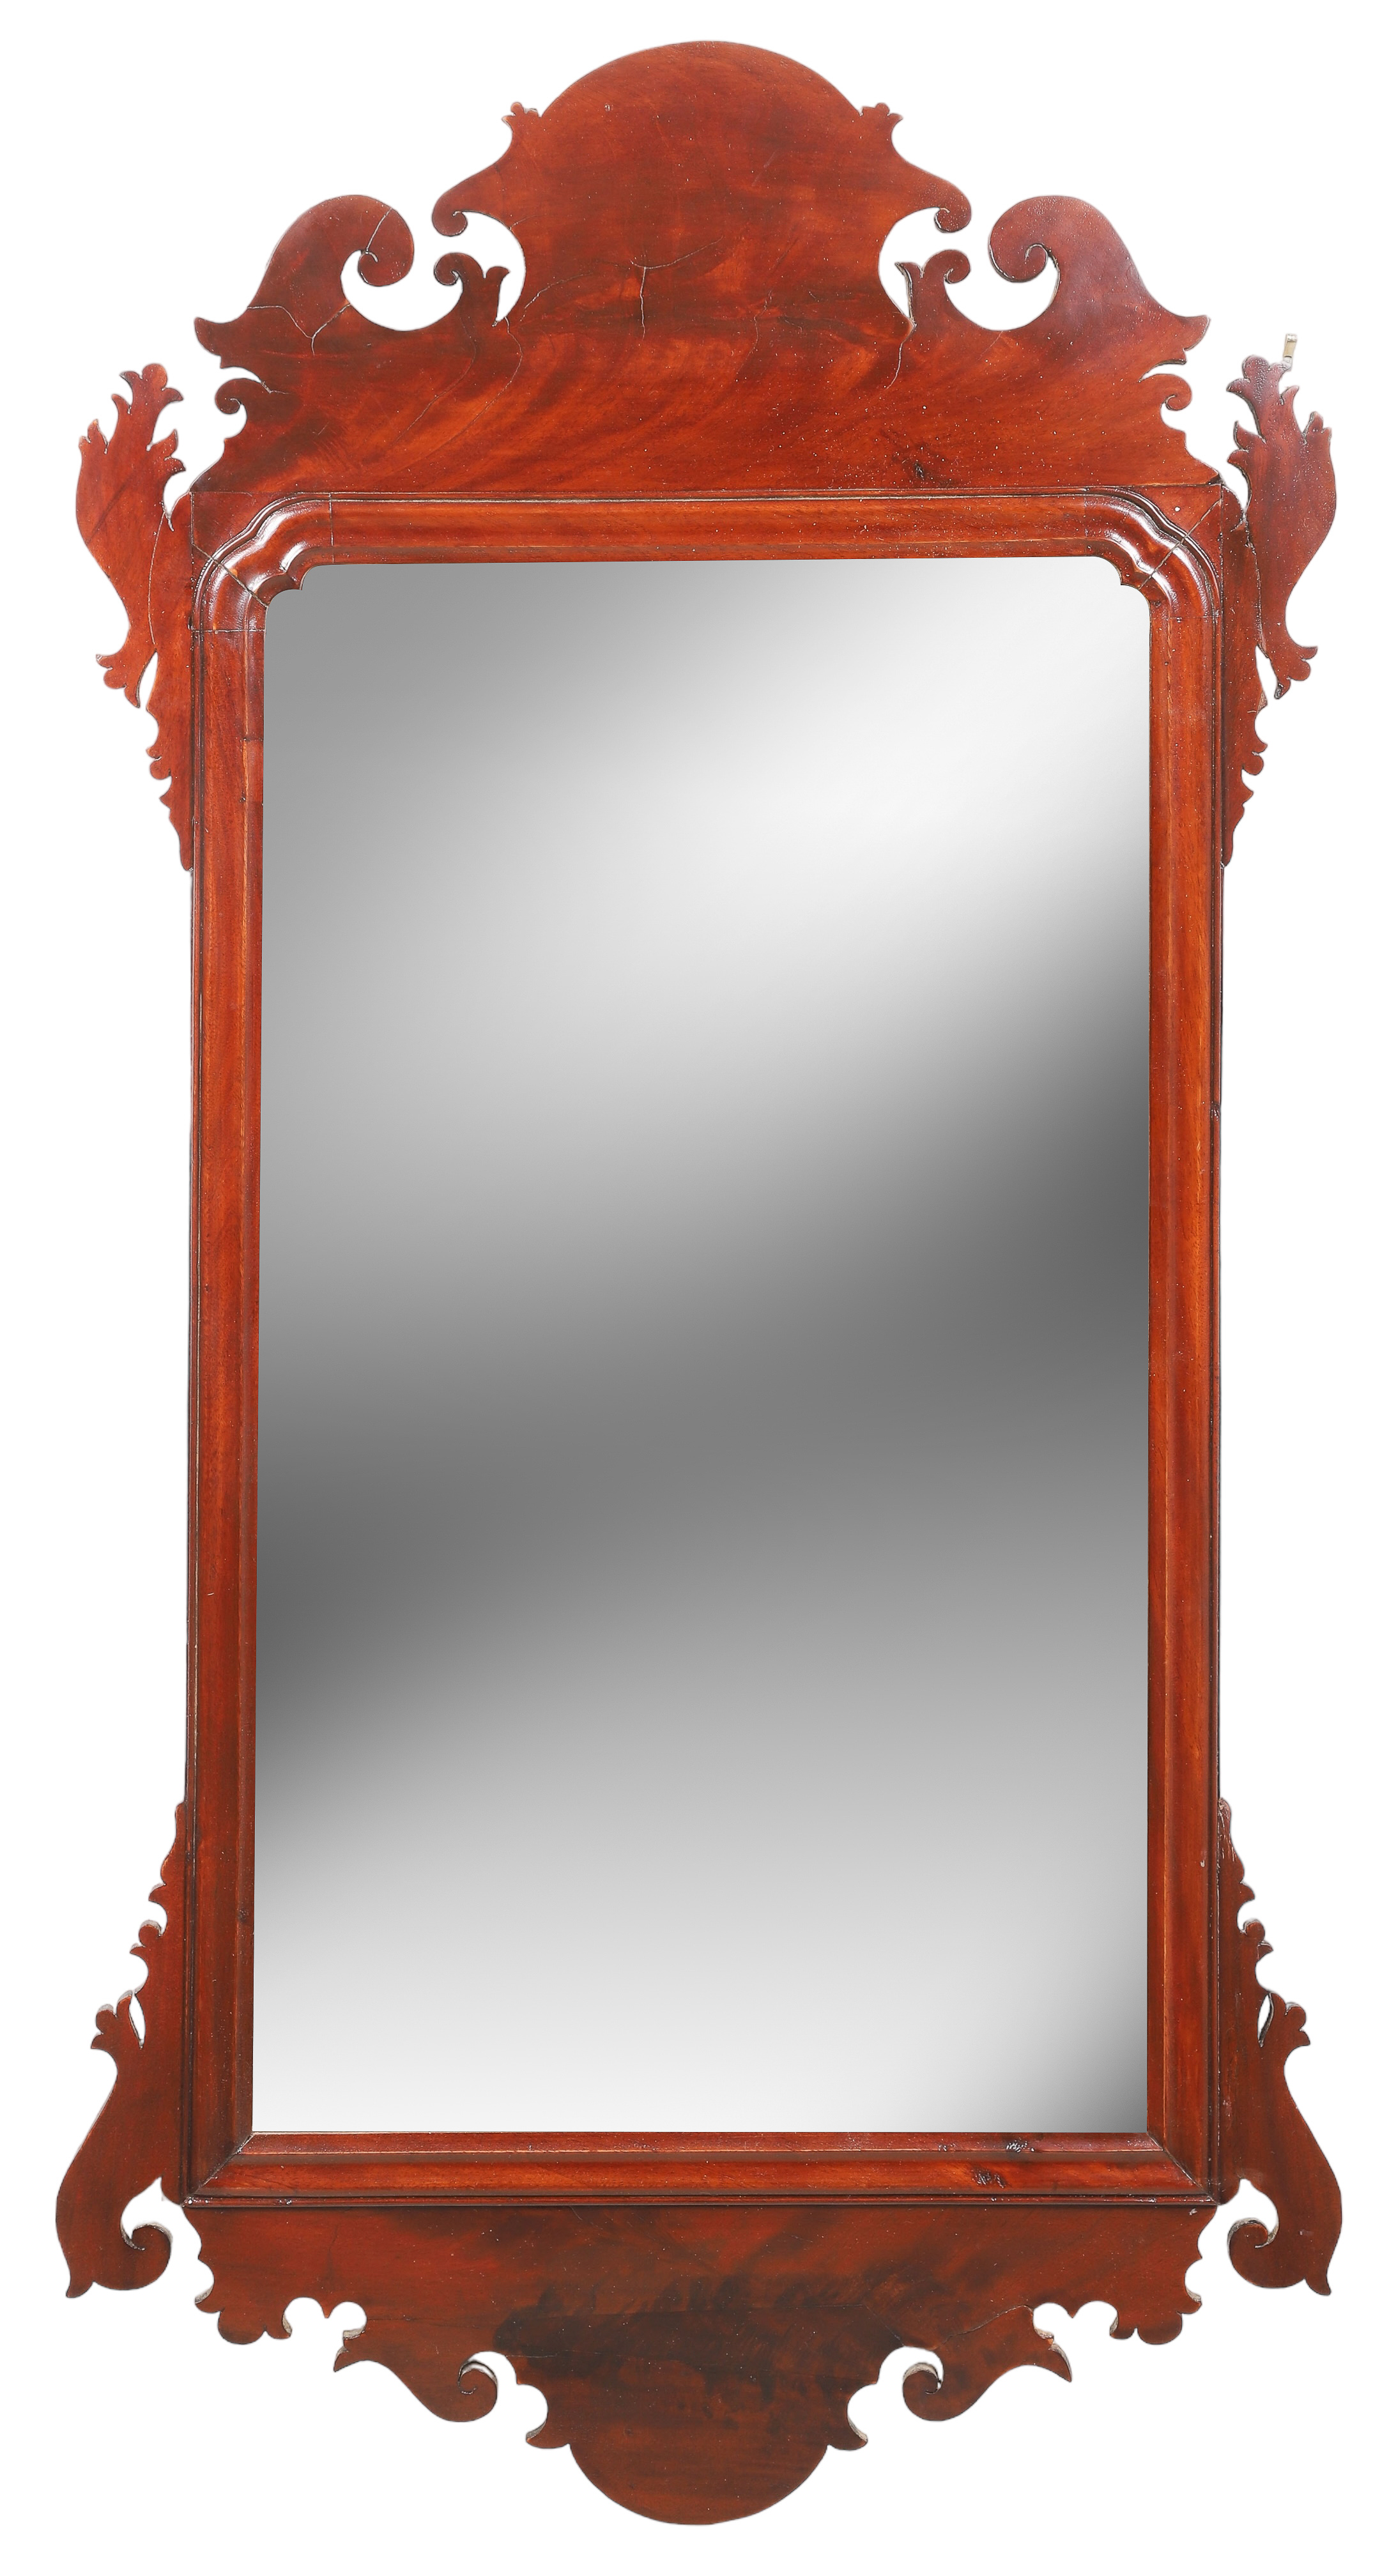 Mahogany Chippendale fretwork wall mirror,